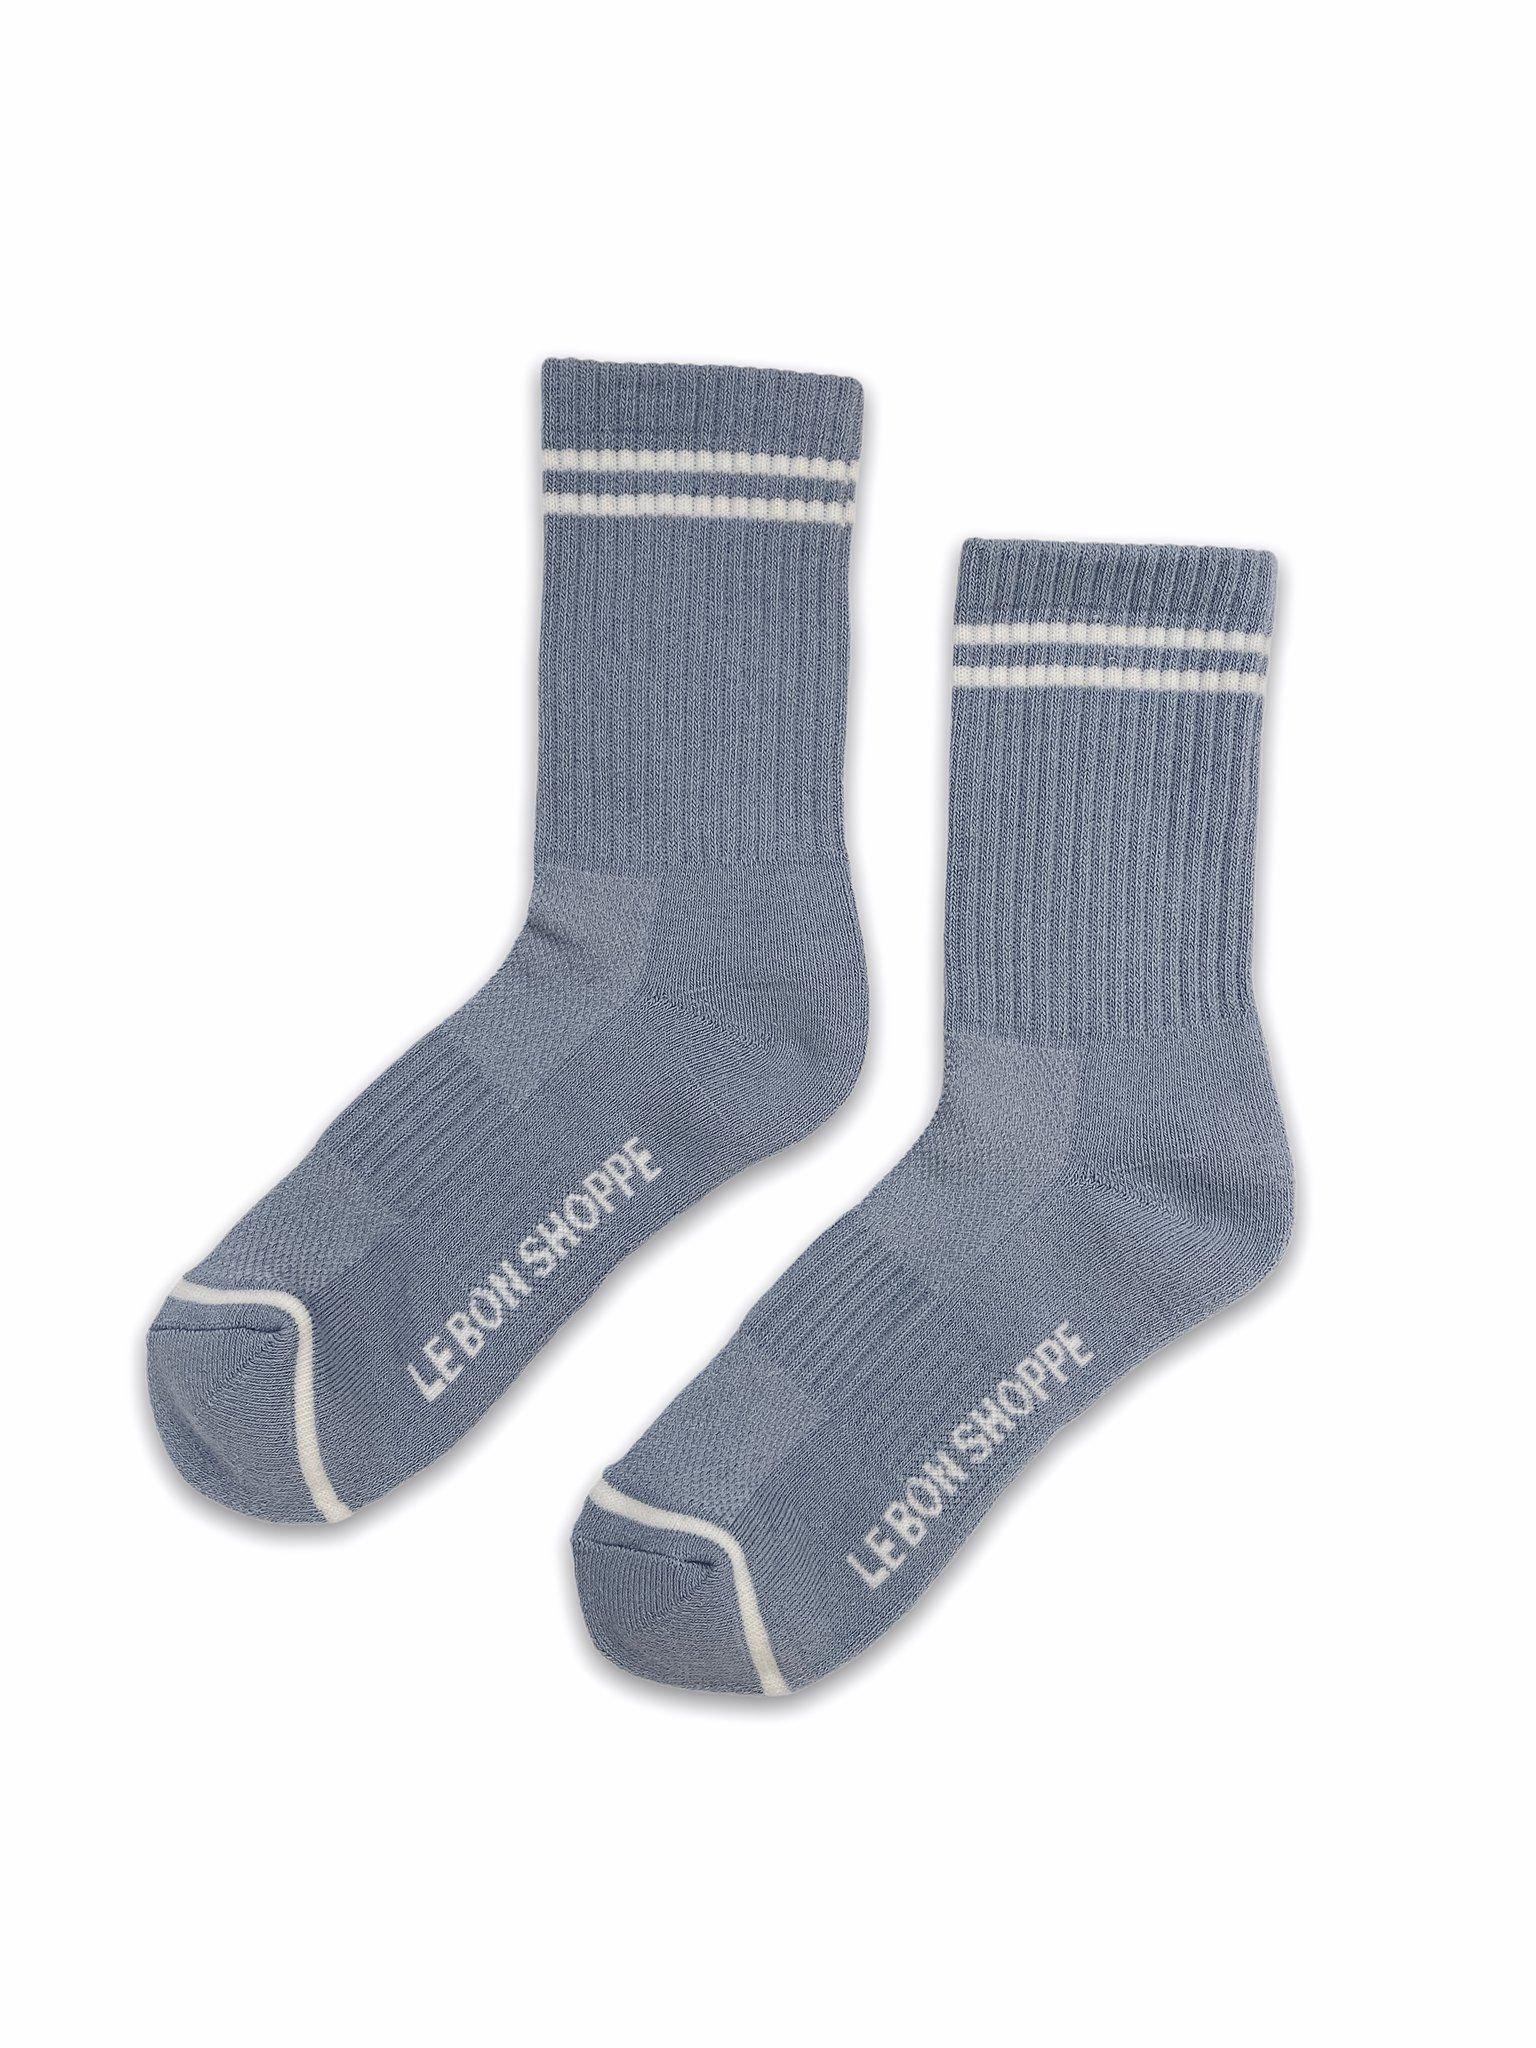 Product Image for Boyfriend Socks, Blue Grey